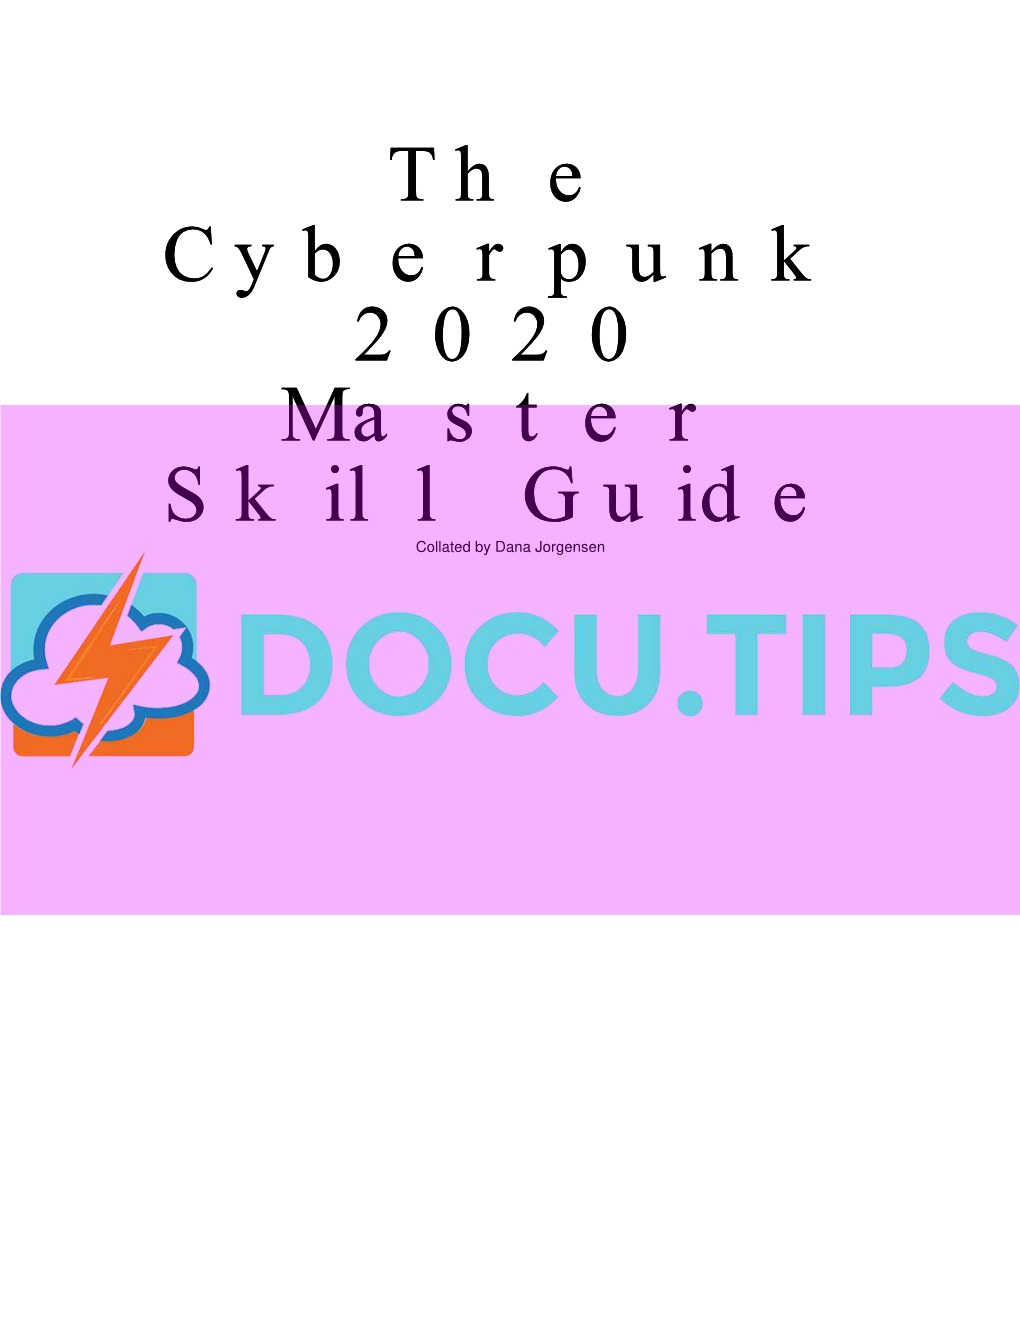 The Cyberpunk 2020 Master Skill Guide